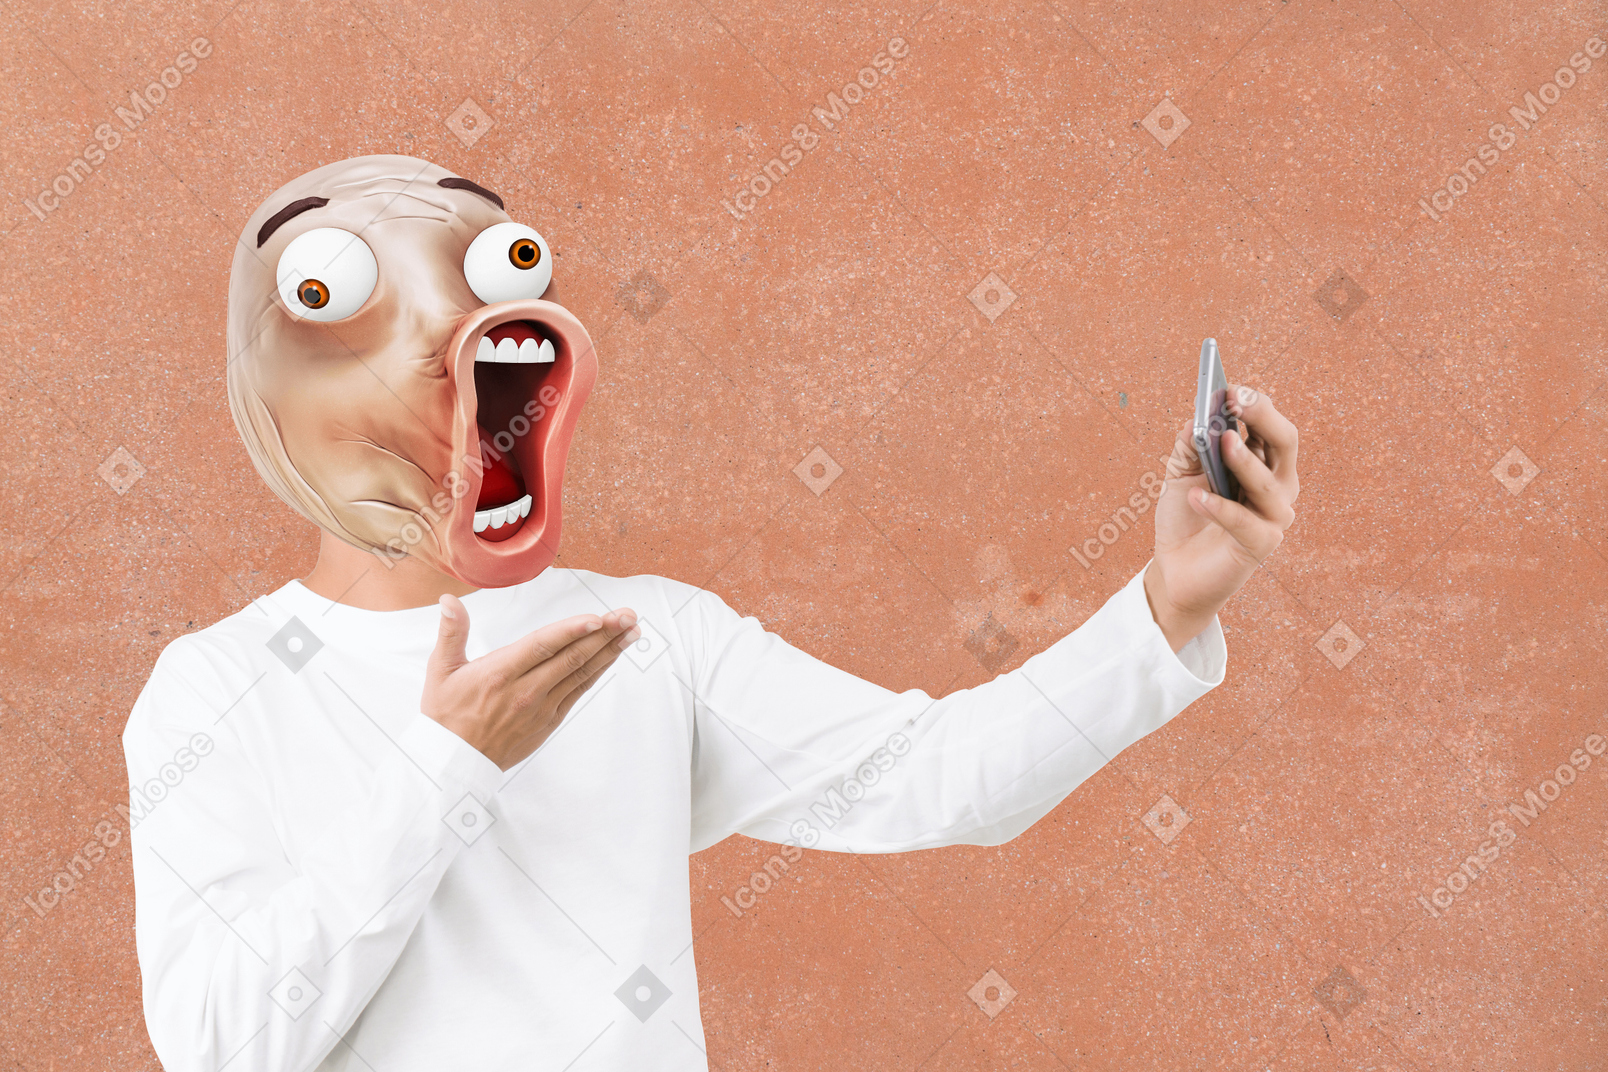 Man with rage comic head holding phone